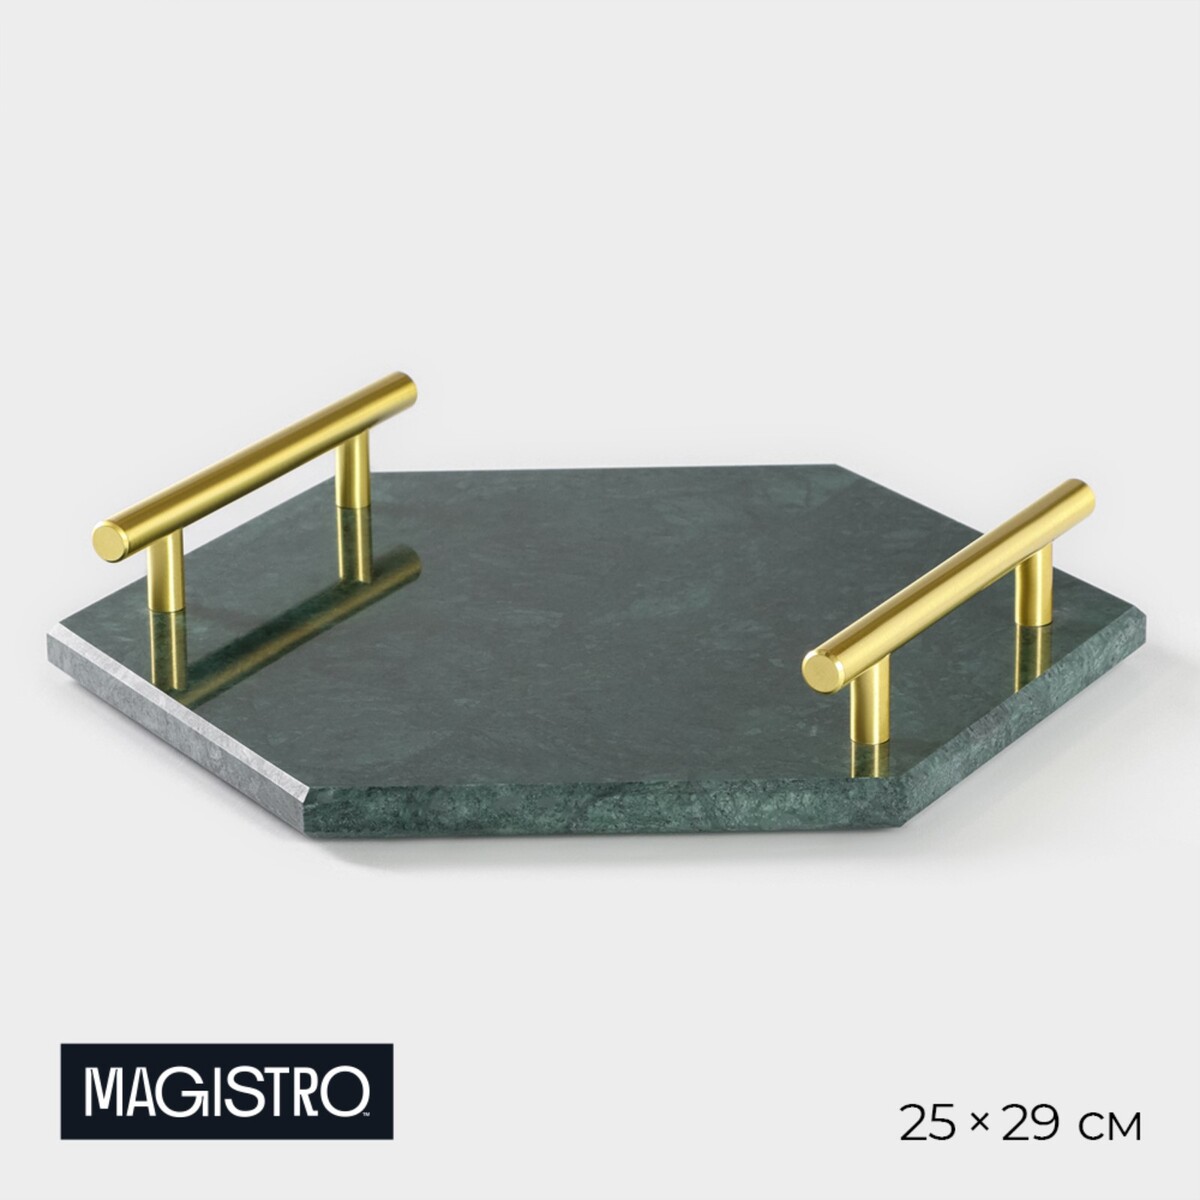    magistro marble, 25 29 ,  